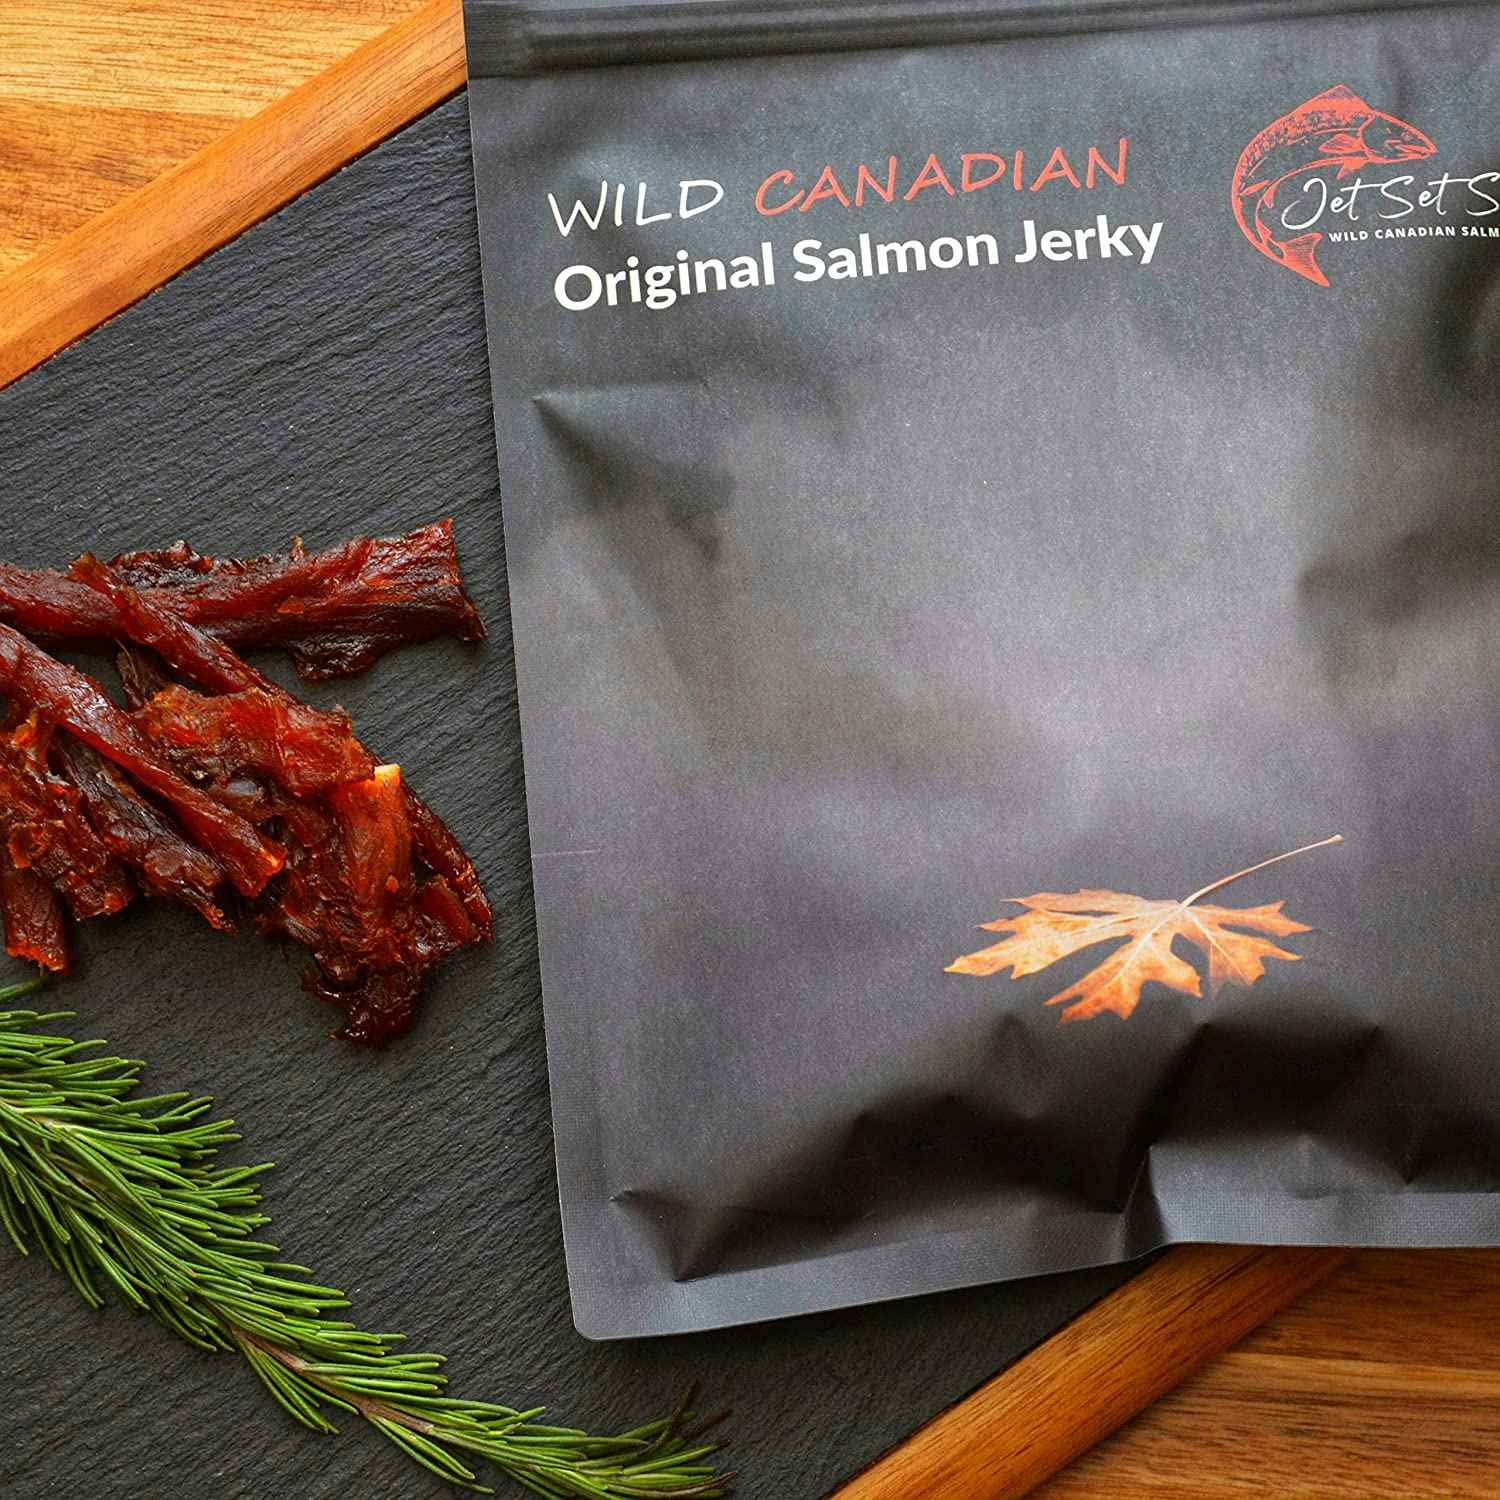 Wild Canadian Salmon Jerky Original Flavor